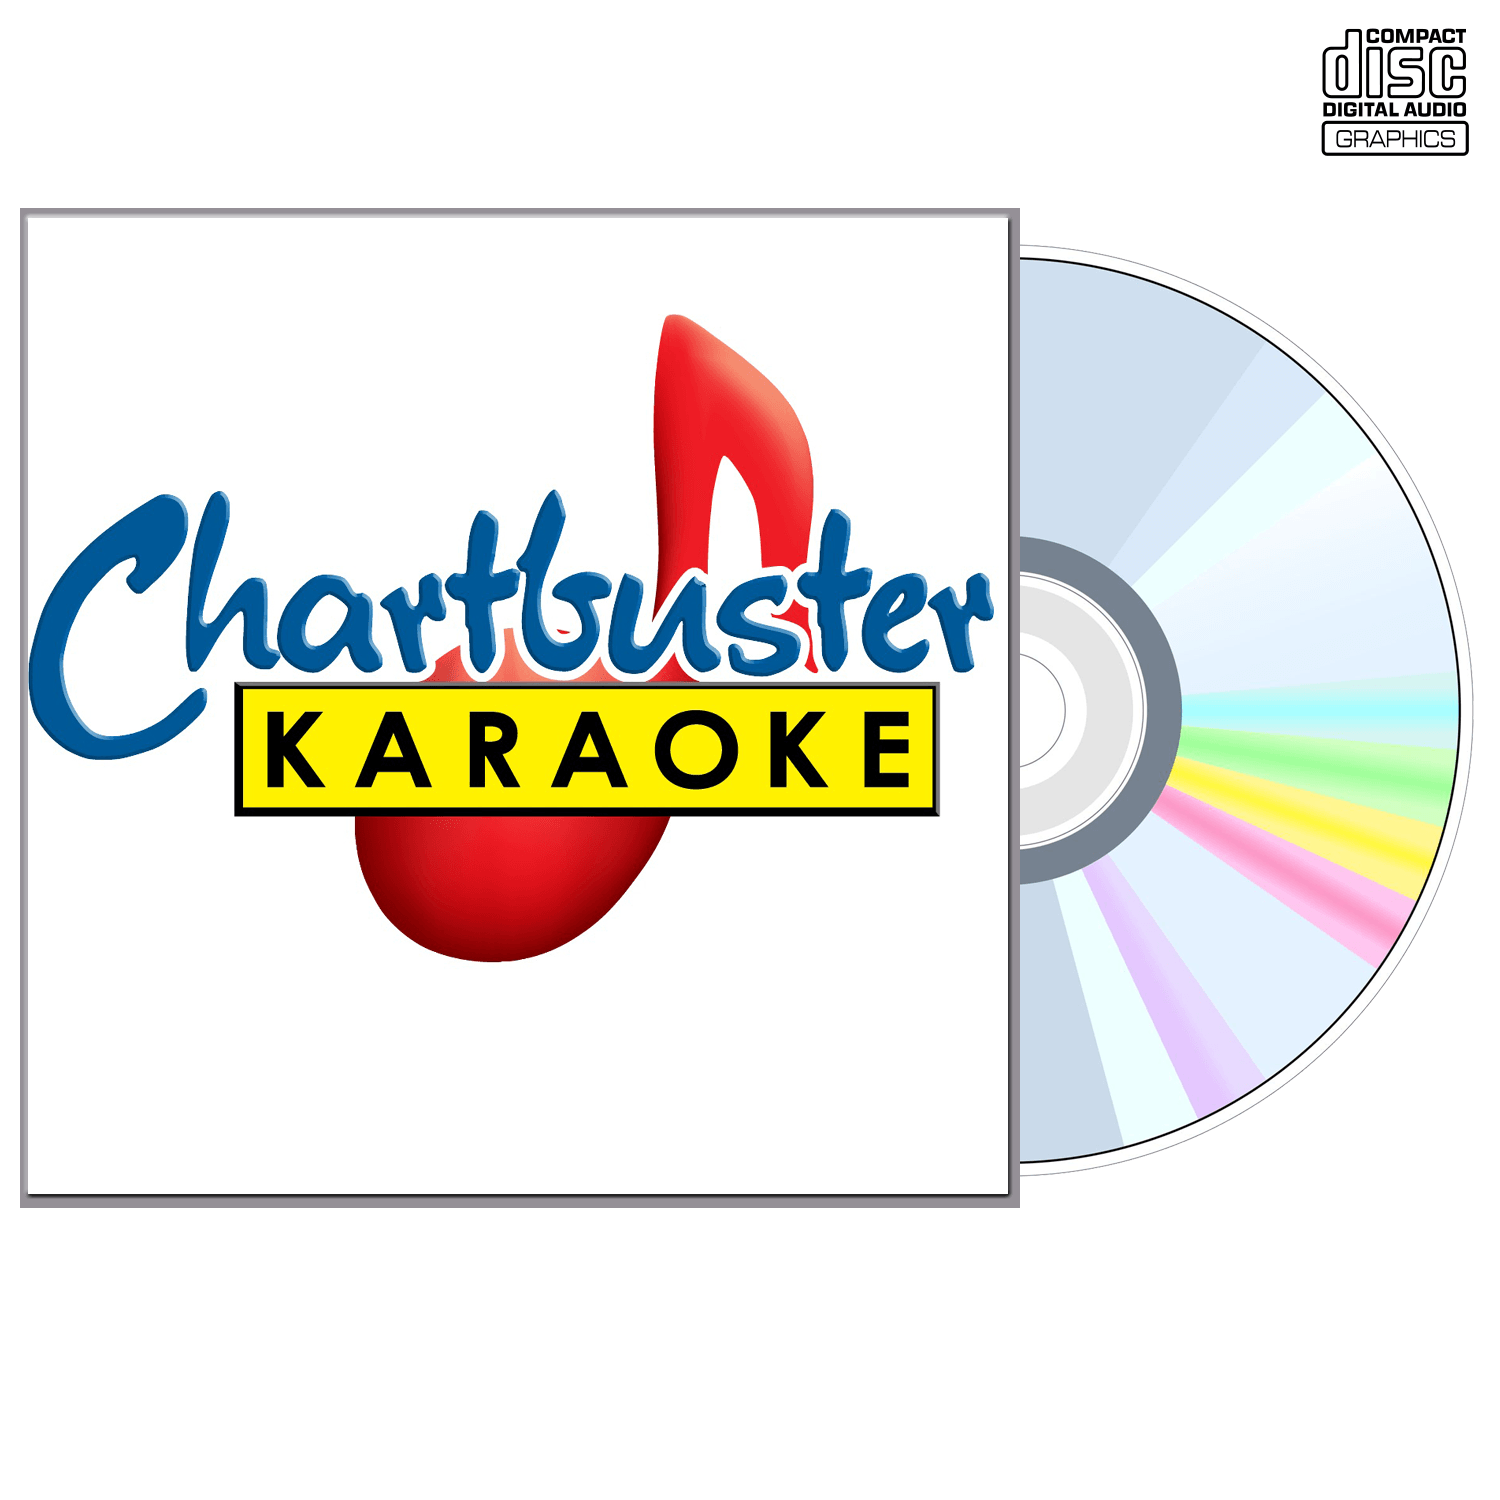 Country Mix Vol 07 - CD+G - Chartbuster Karaoke - Karaoke Home Entertainment